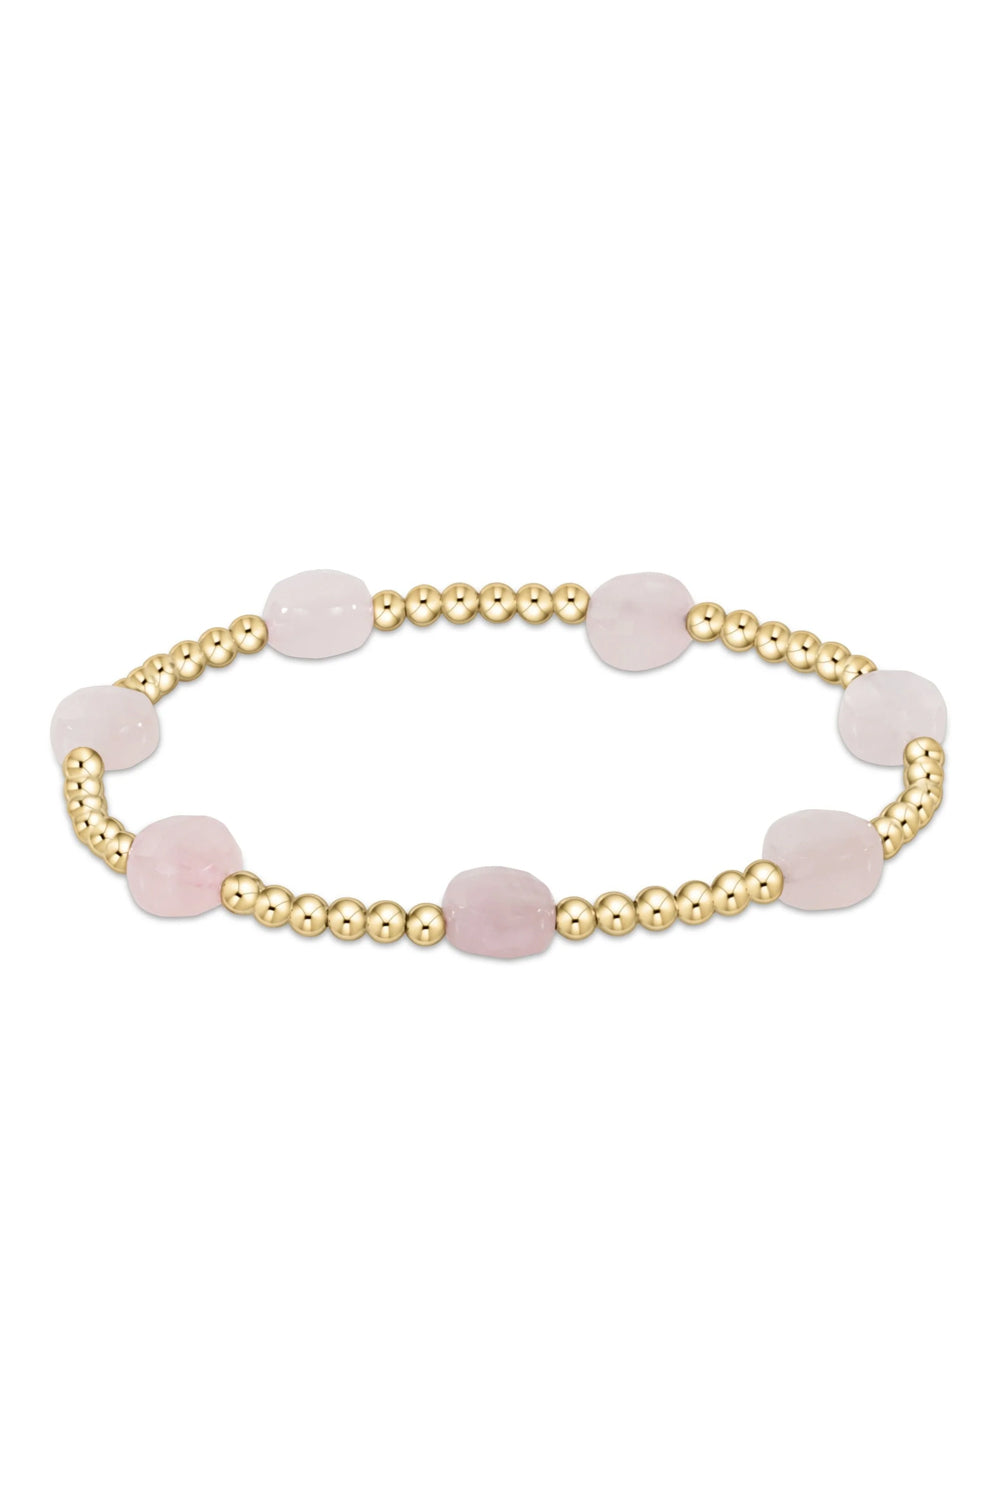 enewton: Admire Gold 3mm Bead Bracelet - Pink Opal | Makk Fashions